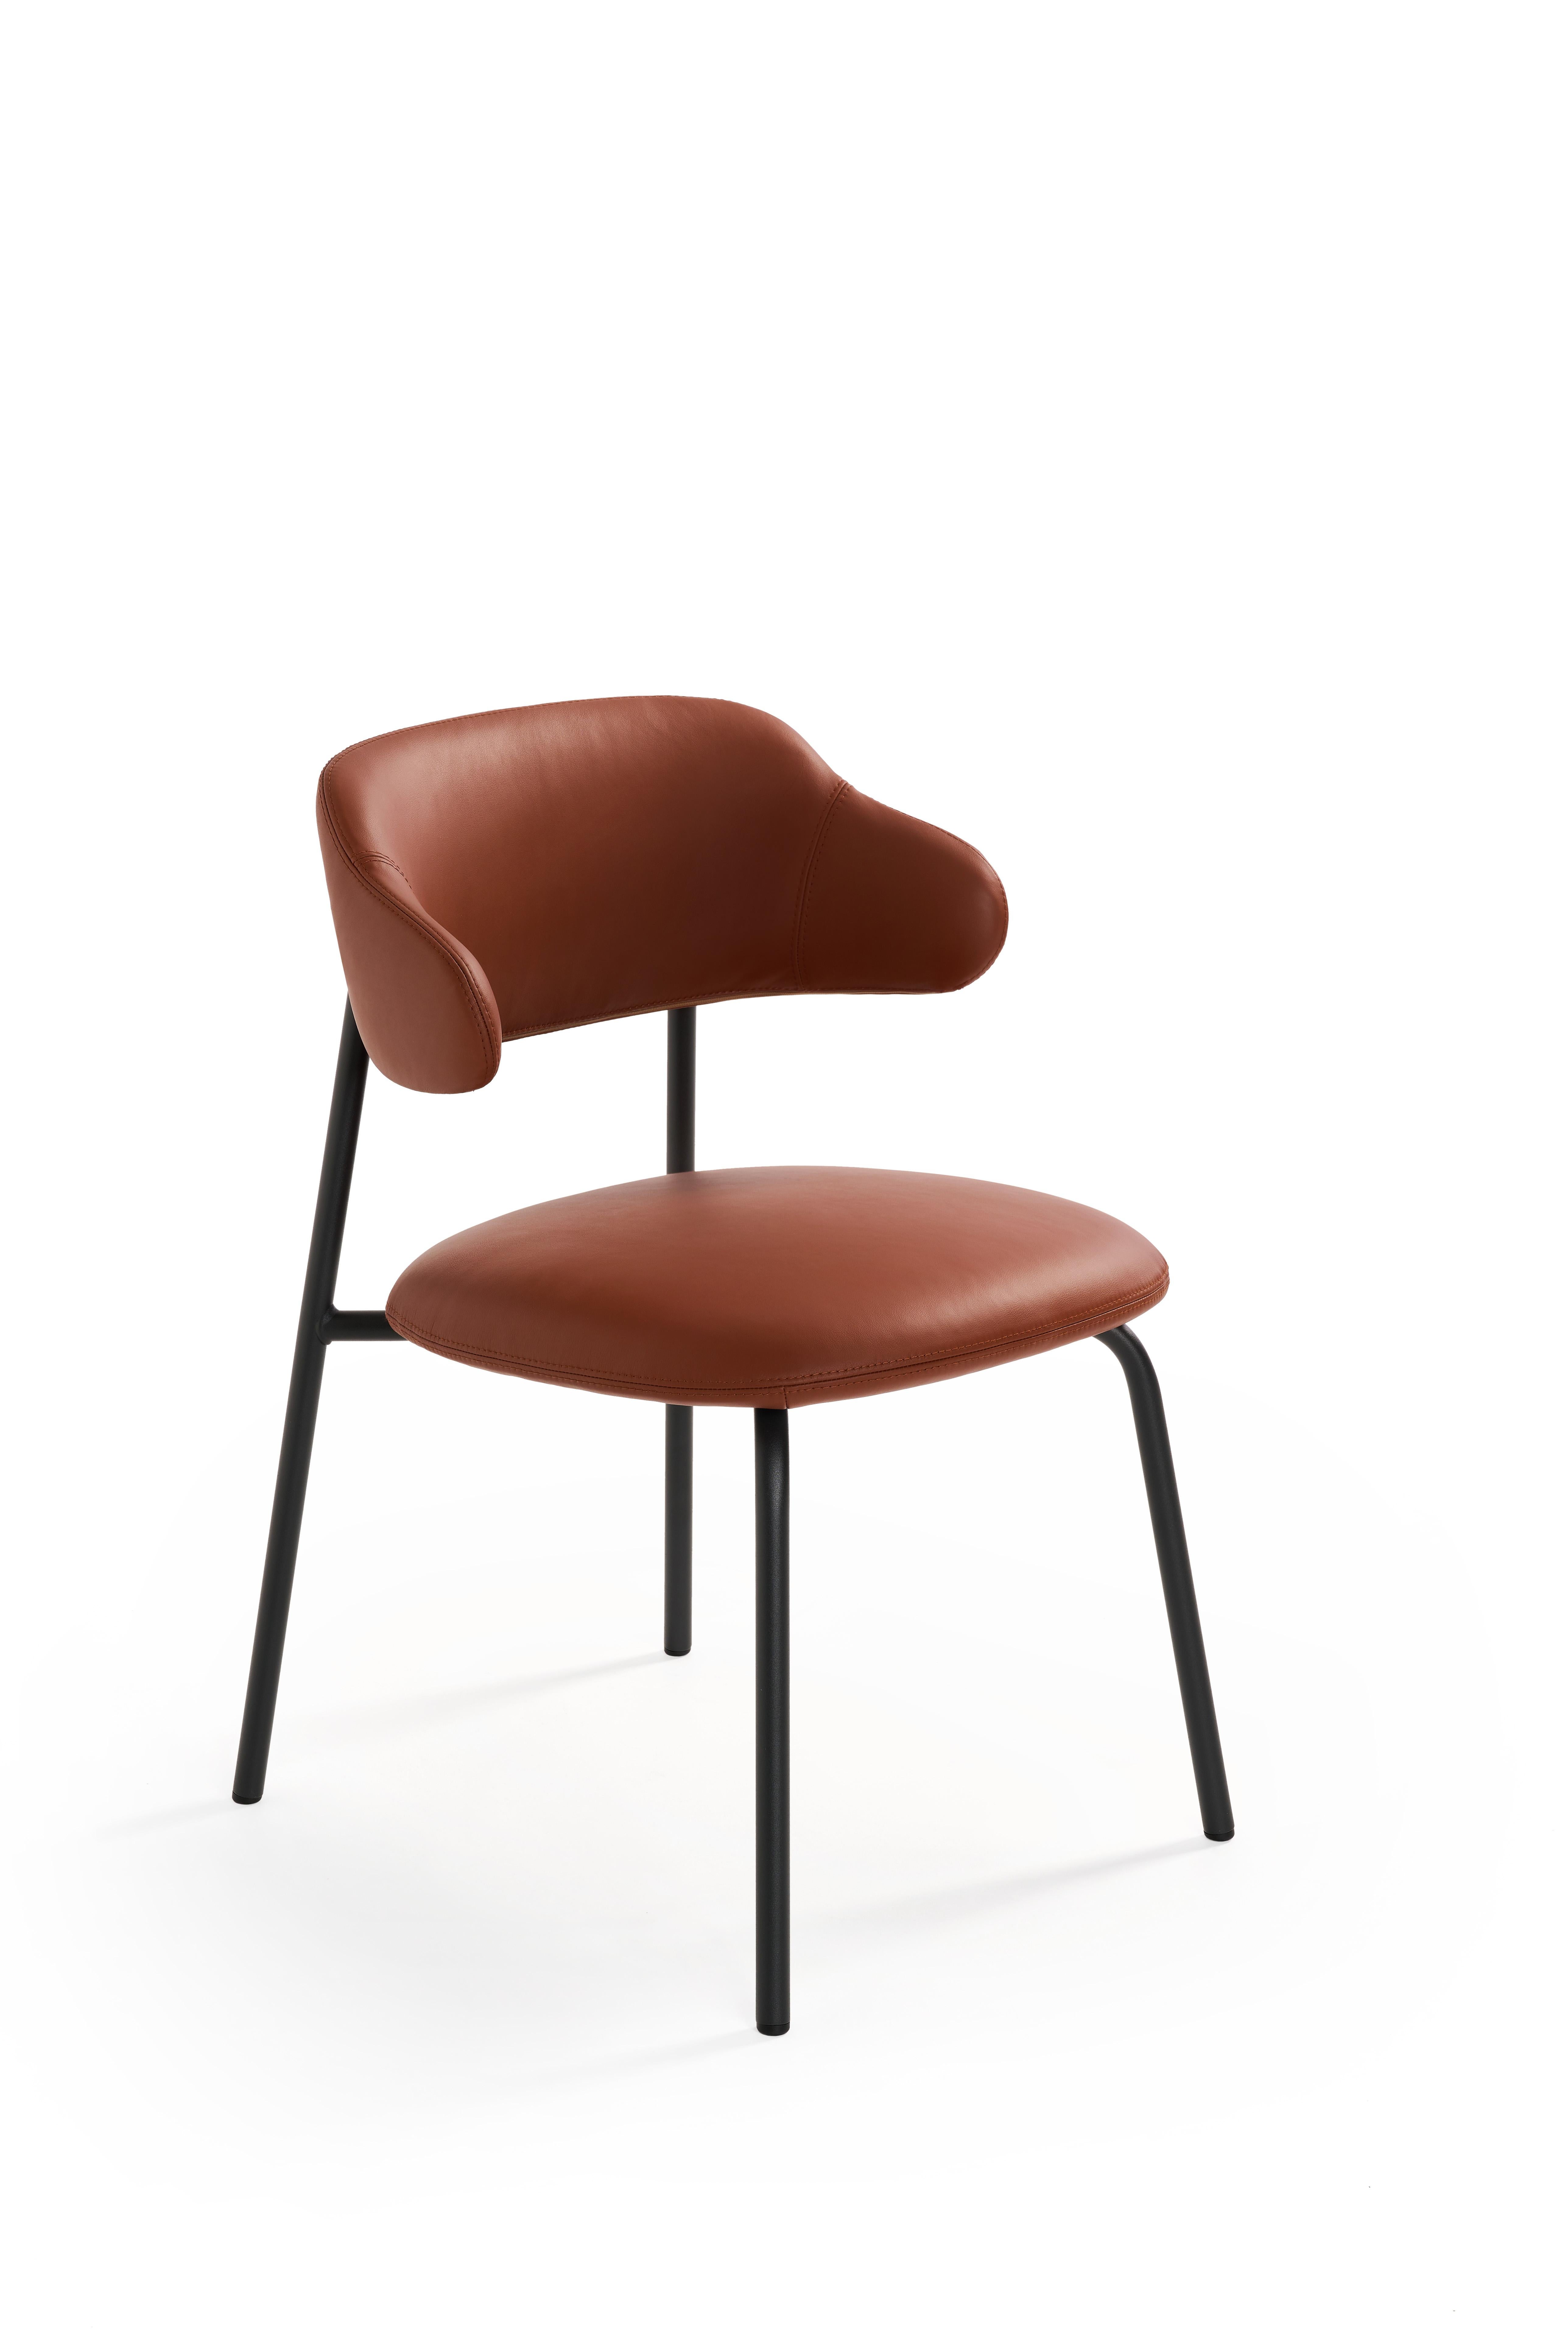 Contemporary Customizable Artifort Aloa Chair Designed by Khodi Feiz  For Sale